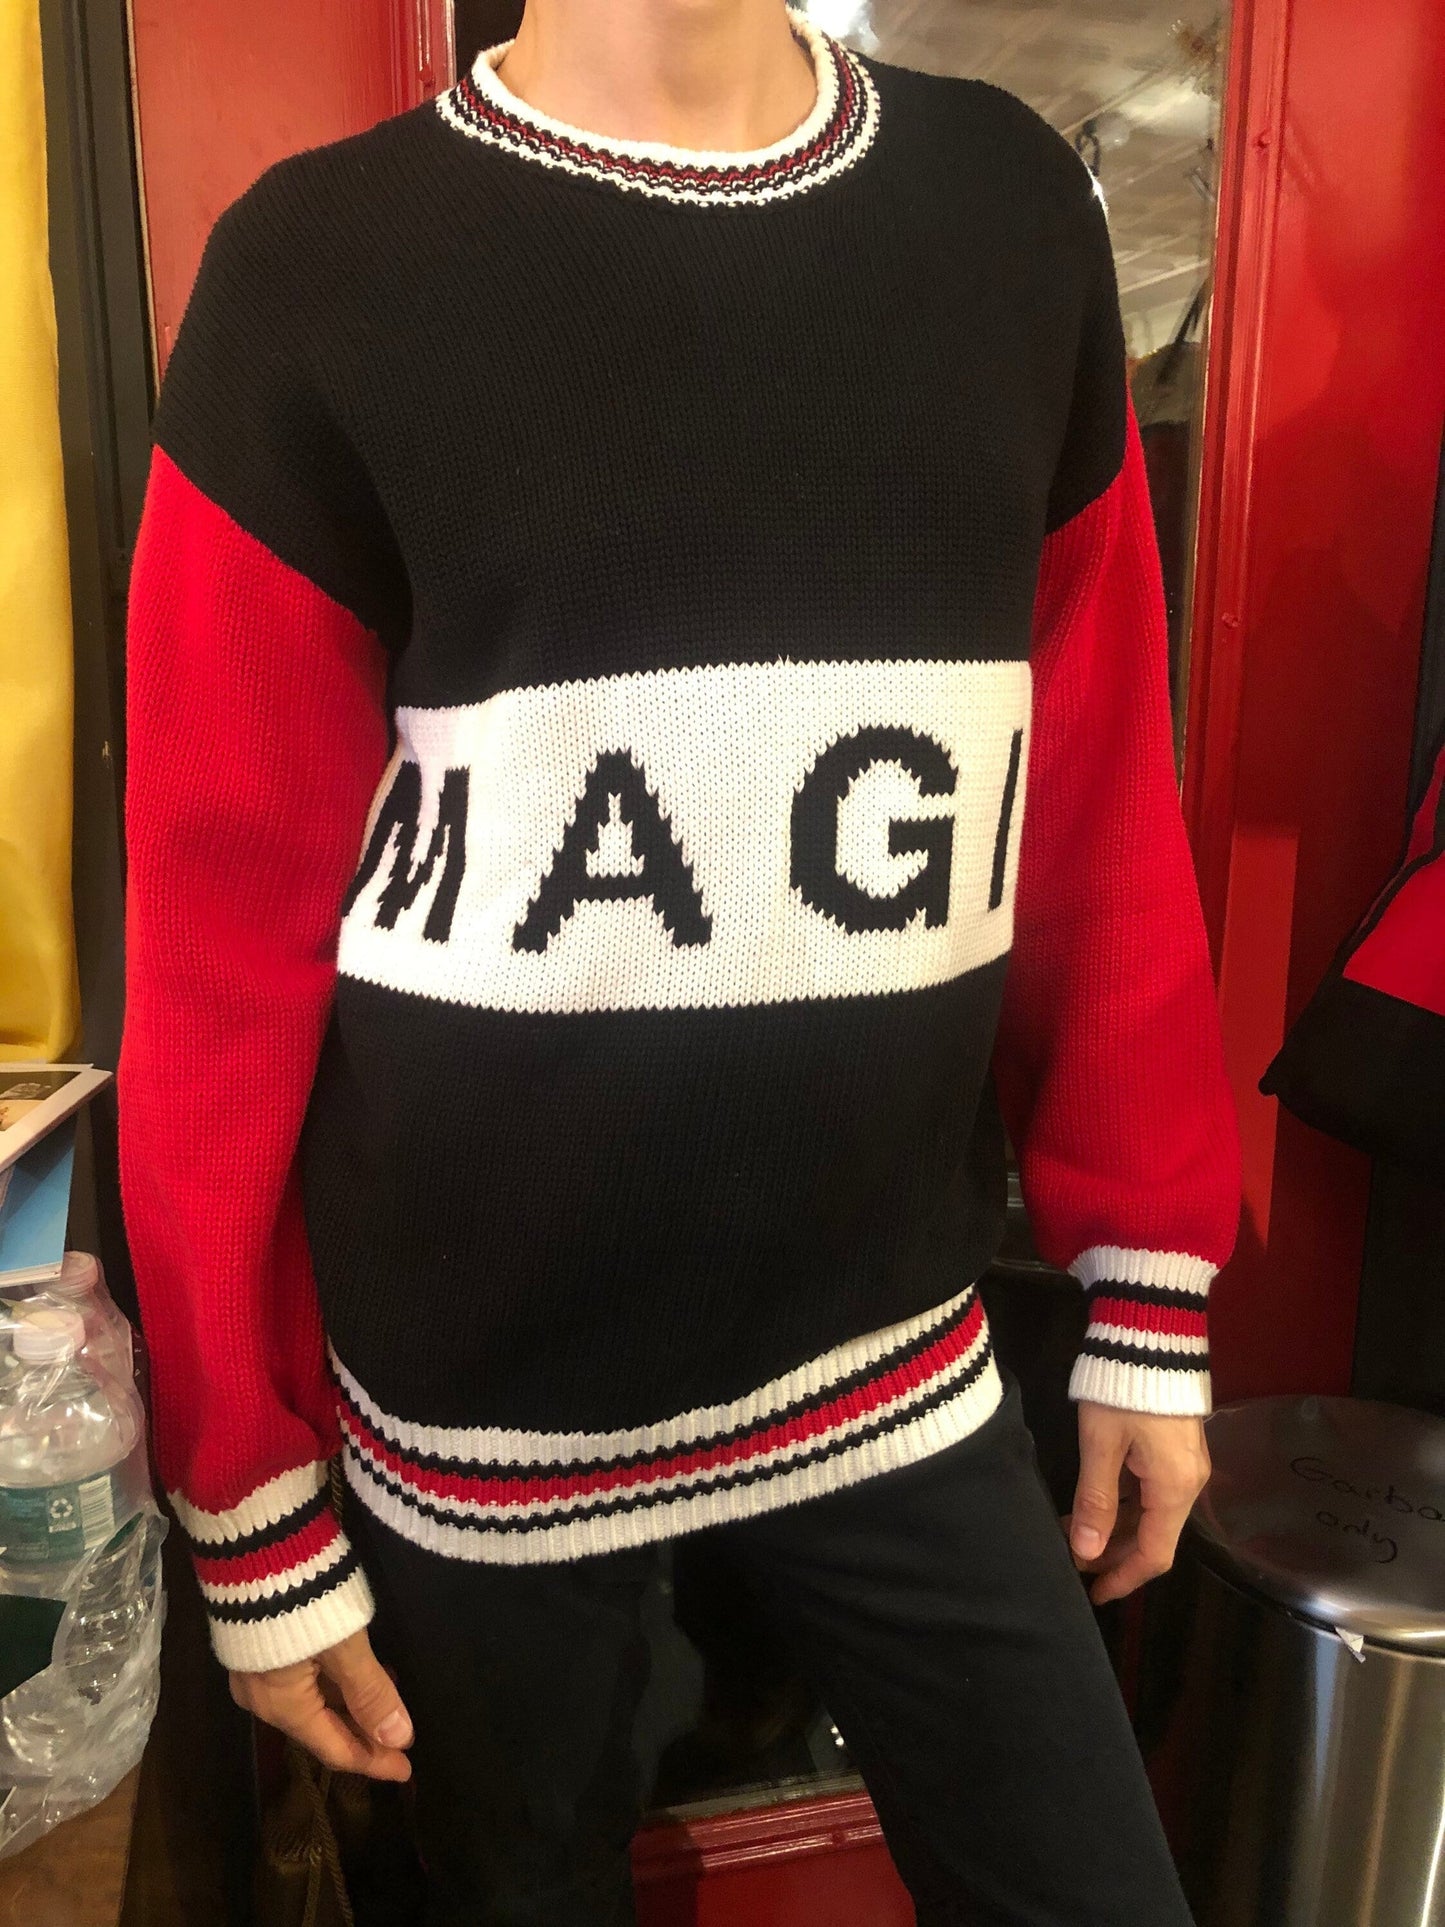 MAGIC 100% Cotton Jacquard technique sweater